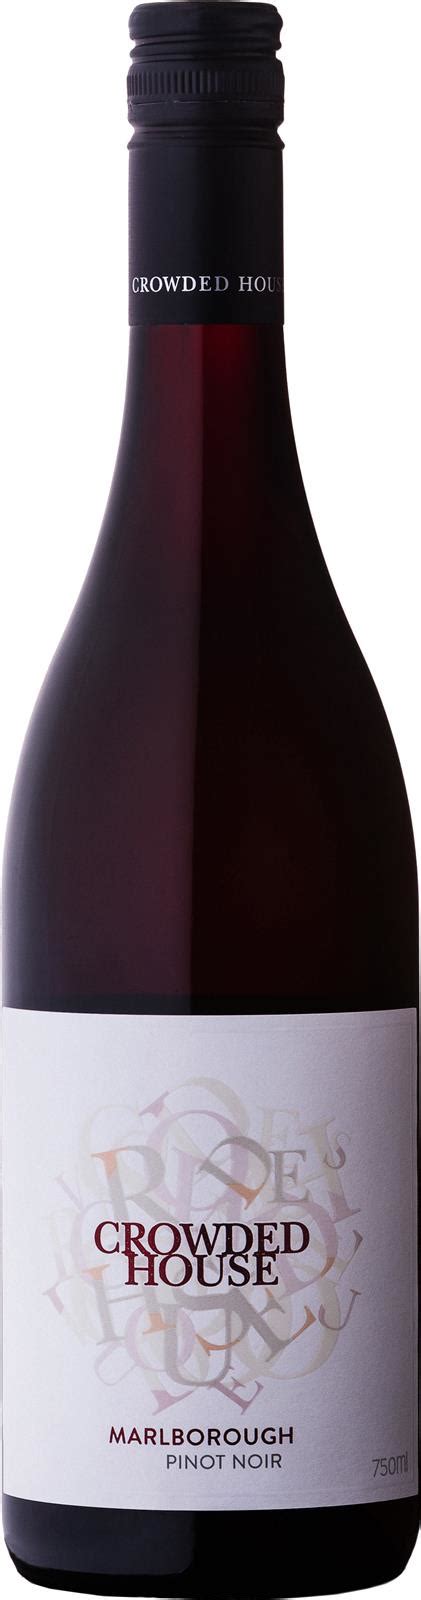 Crowded House Marlborough Pinot Noir 2018 Buy Nz Wine Online Black Market